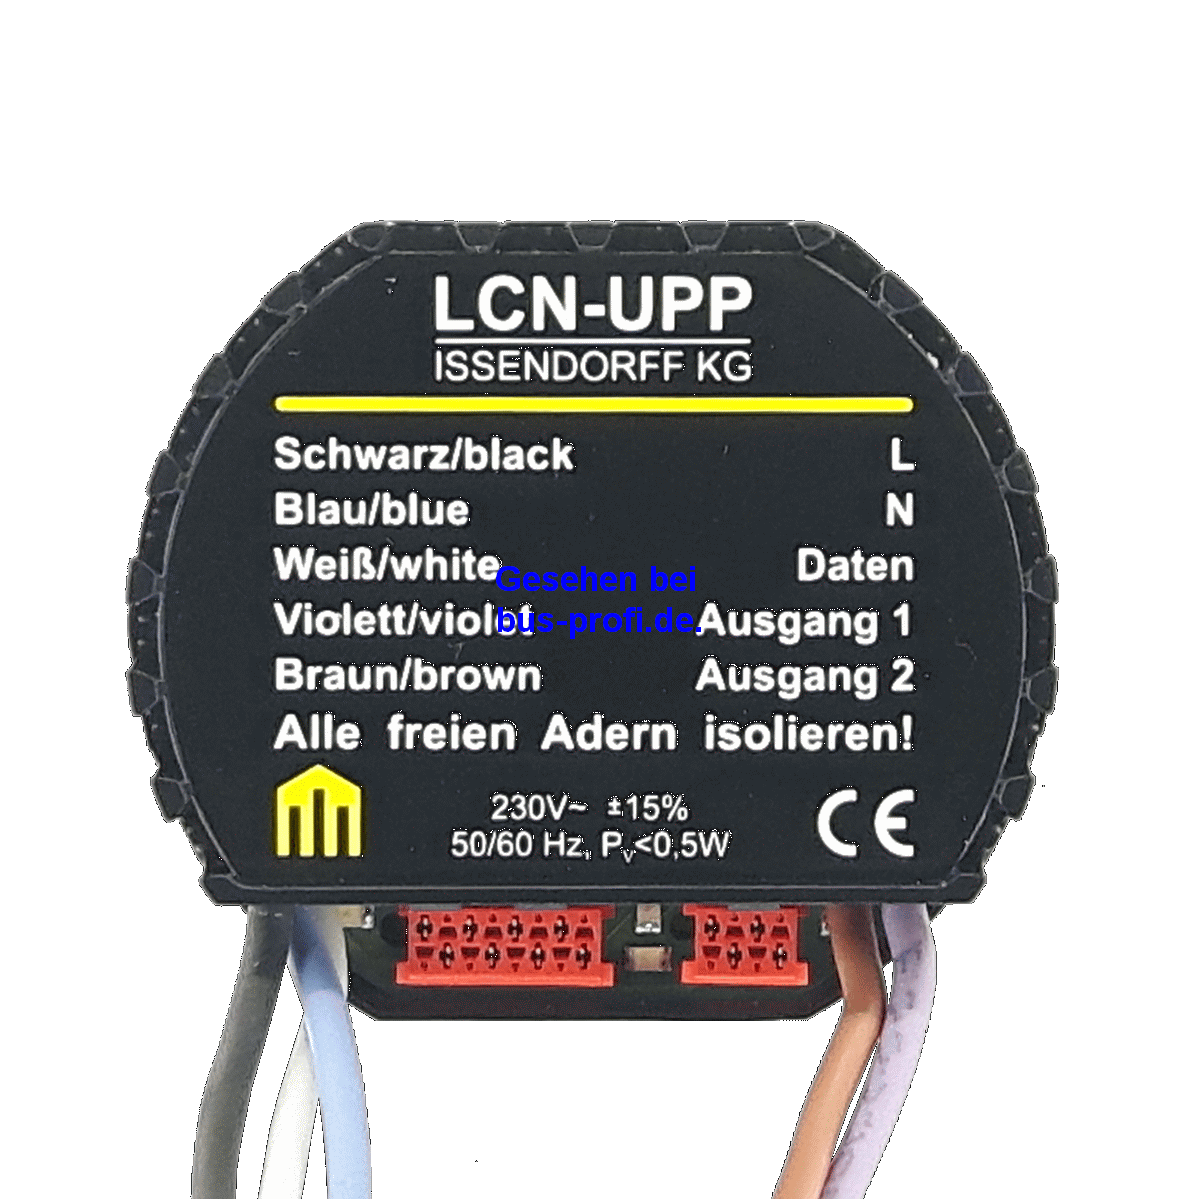 Issendorff LCN-UPP